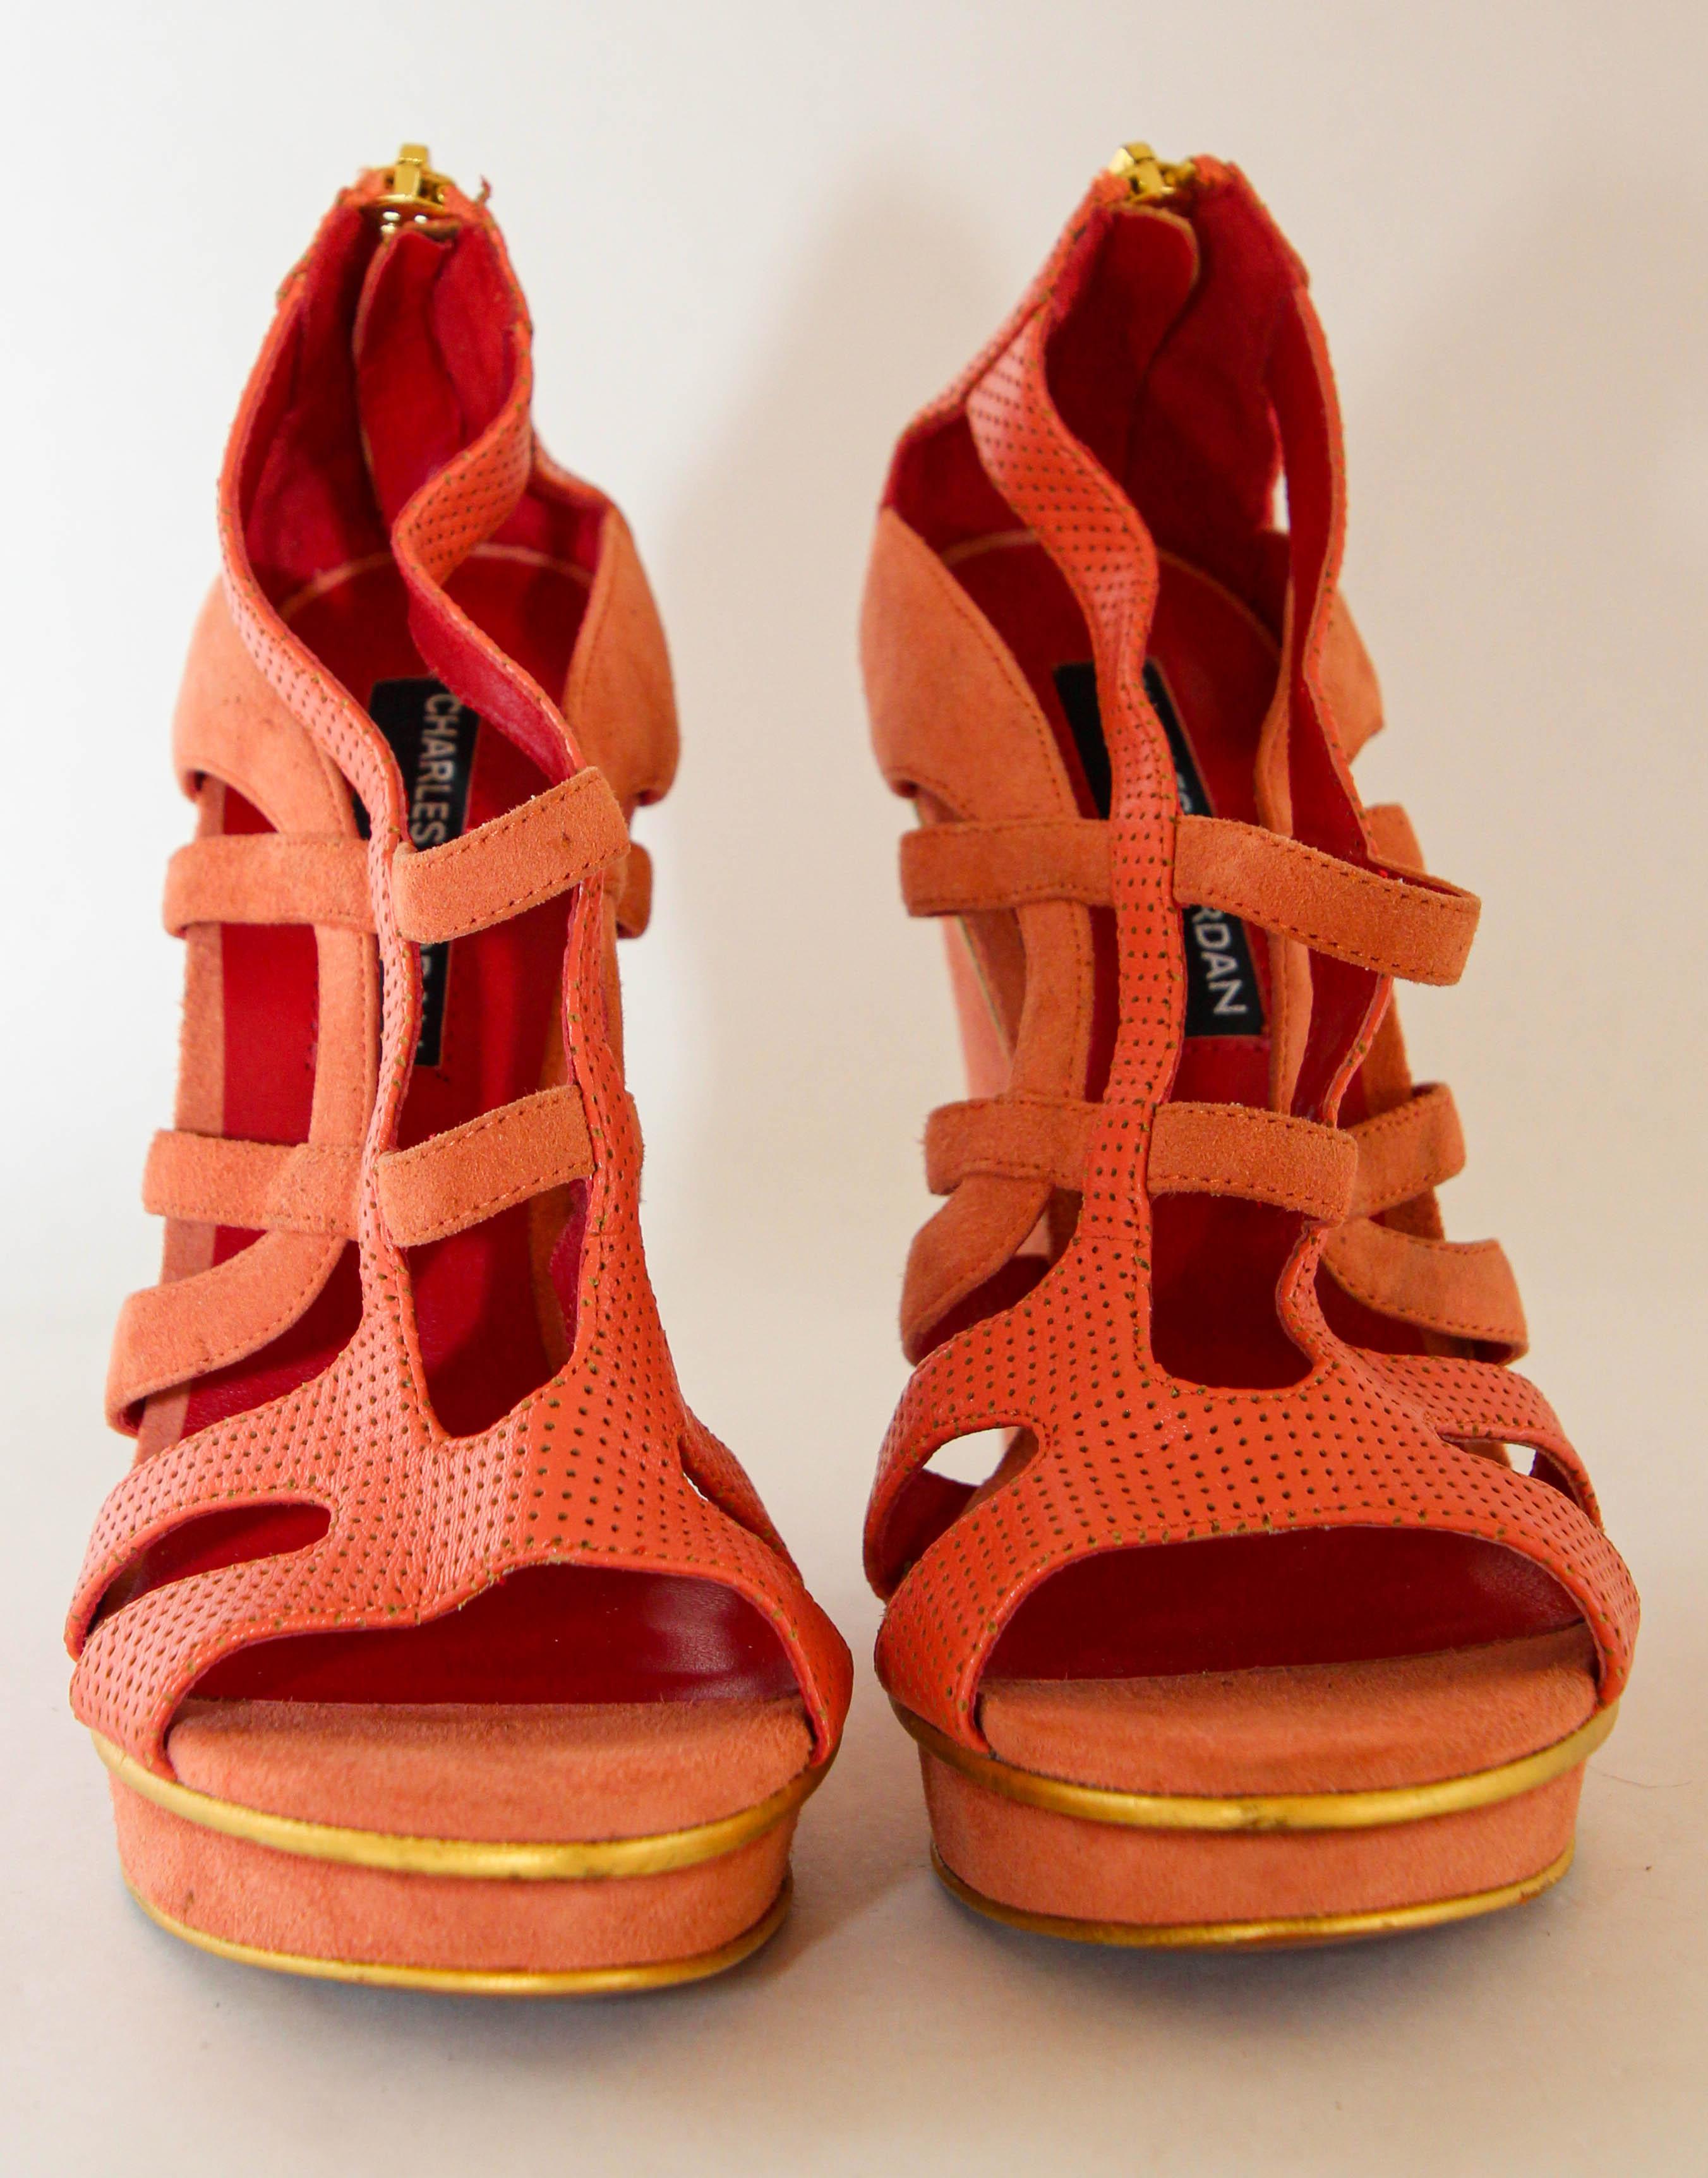 Charles Jourdan Paris Orange Wedge Sandals Size US 6 EU 36 For Sale 9